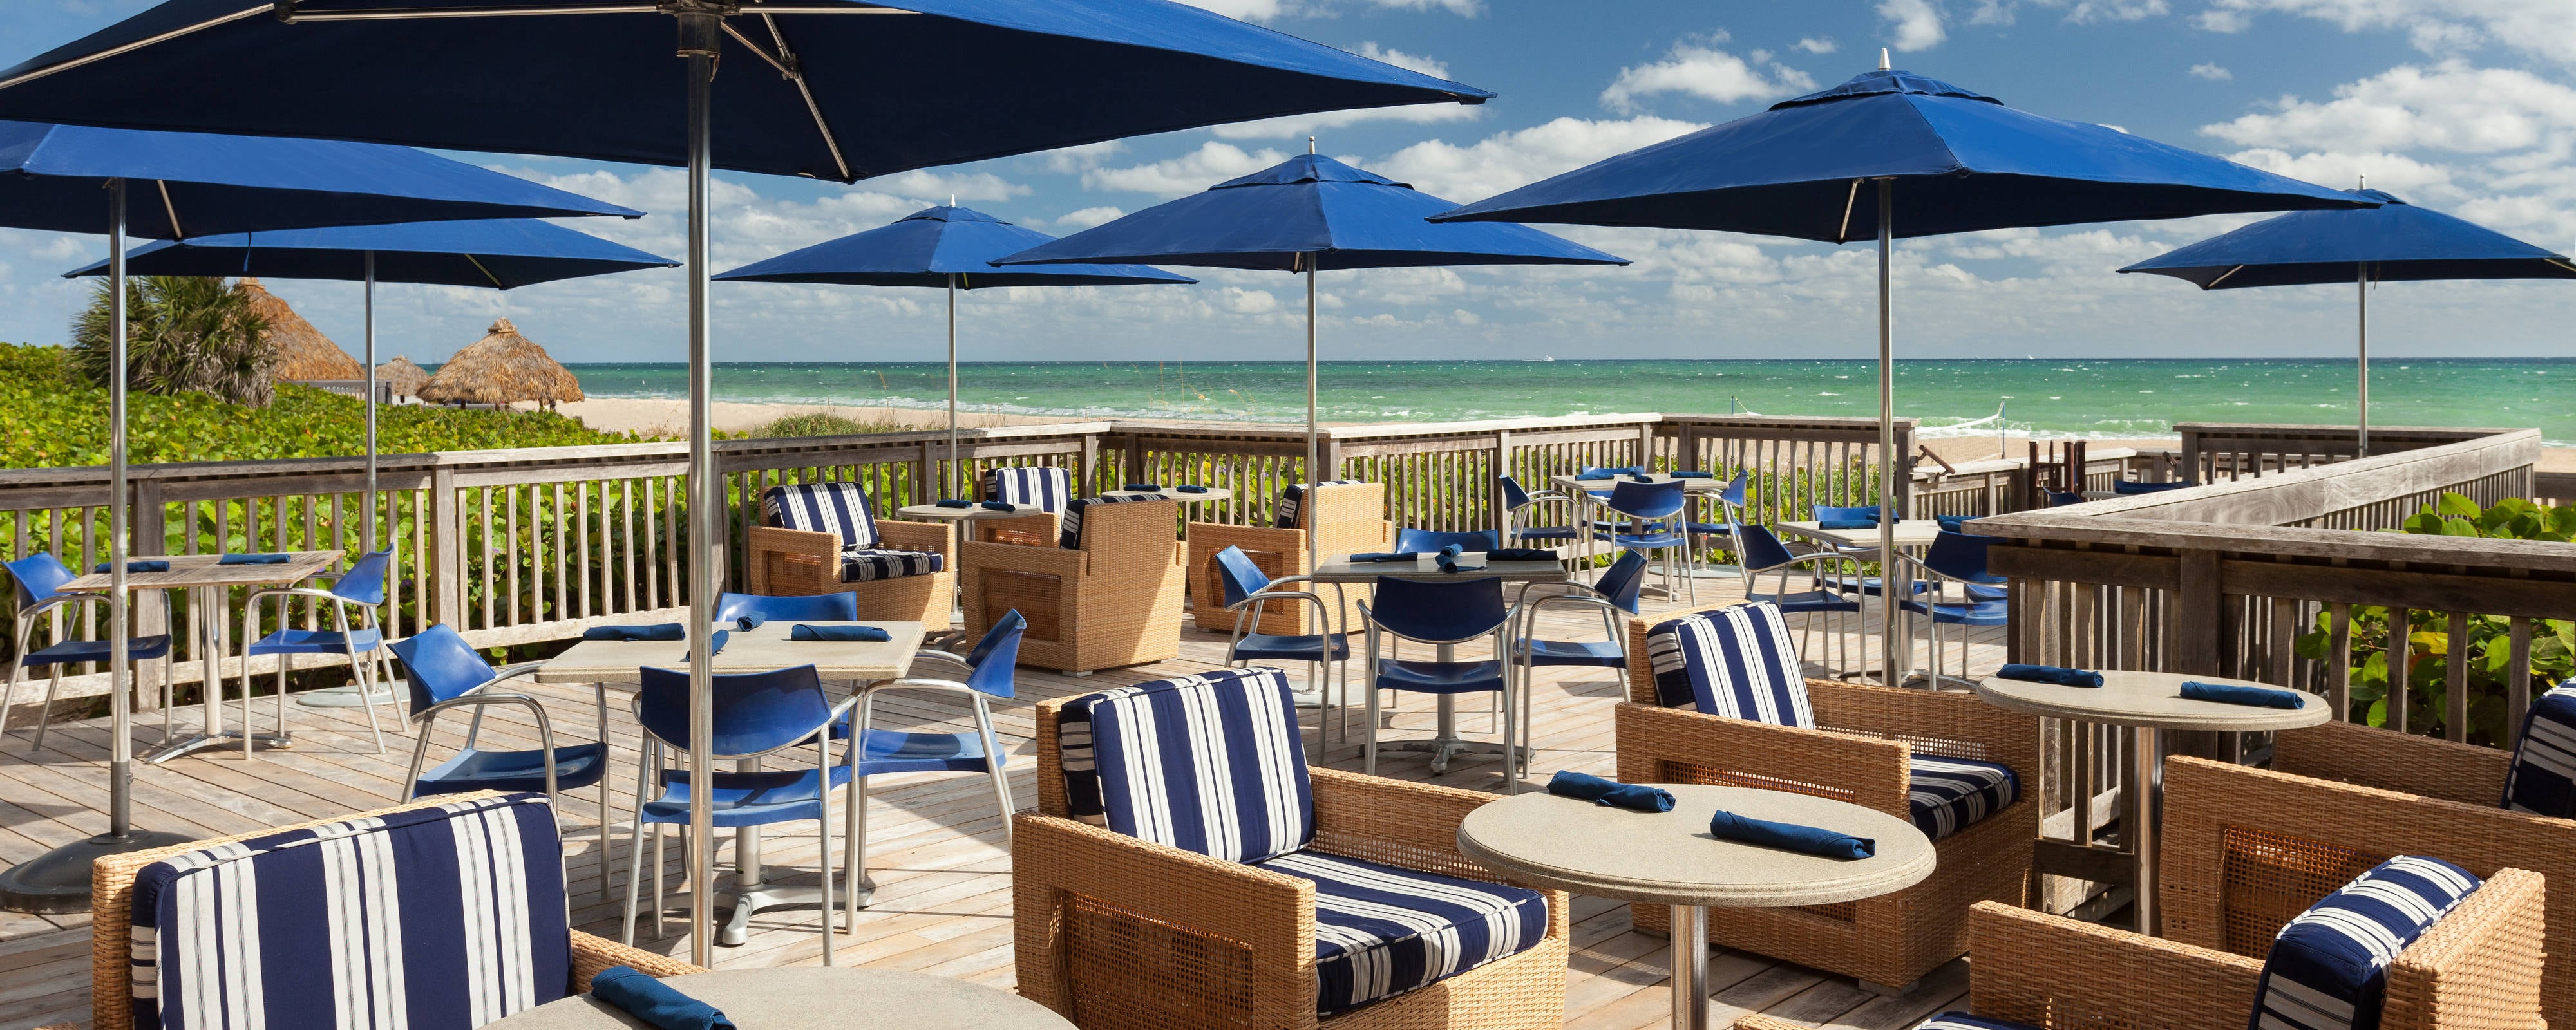 Fort Lauderdale FL Restaurants | Fort Lauderdale Marriott Harbor Beach